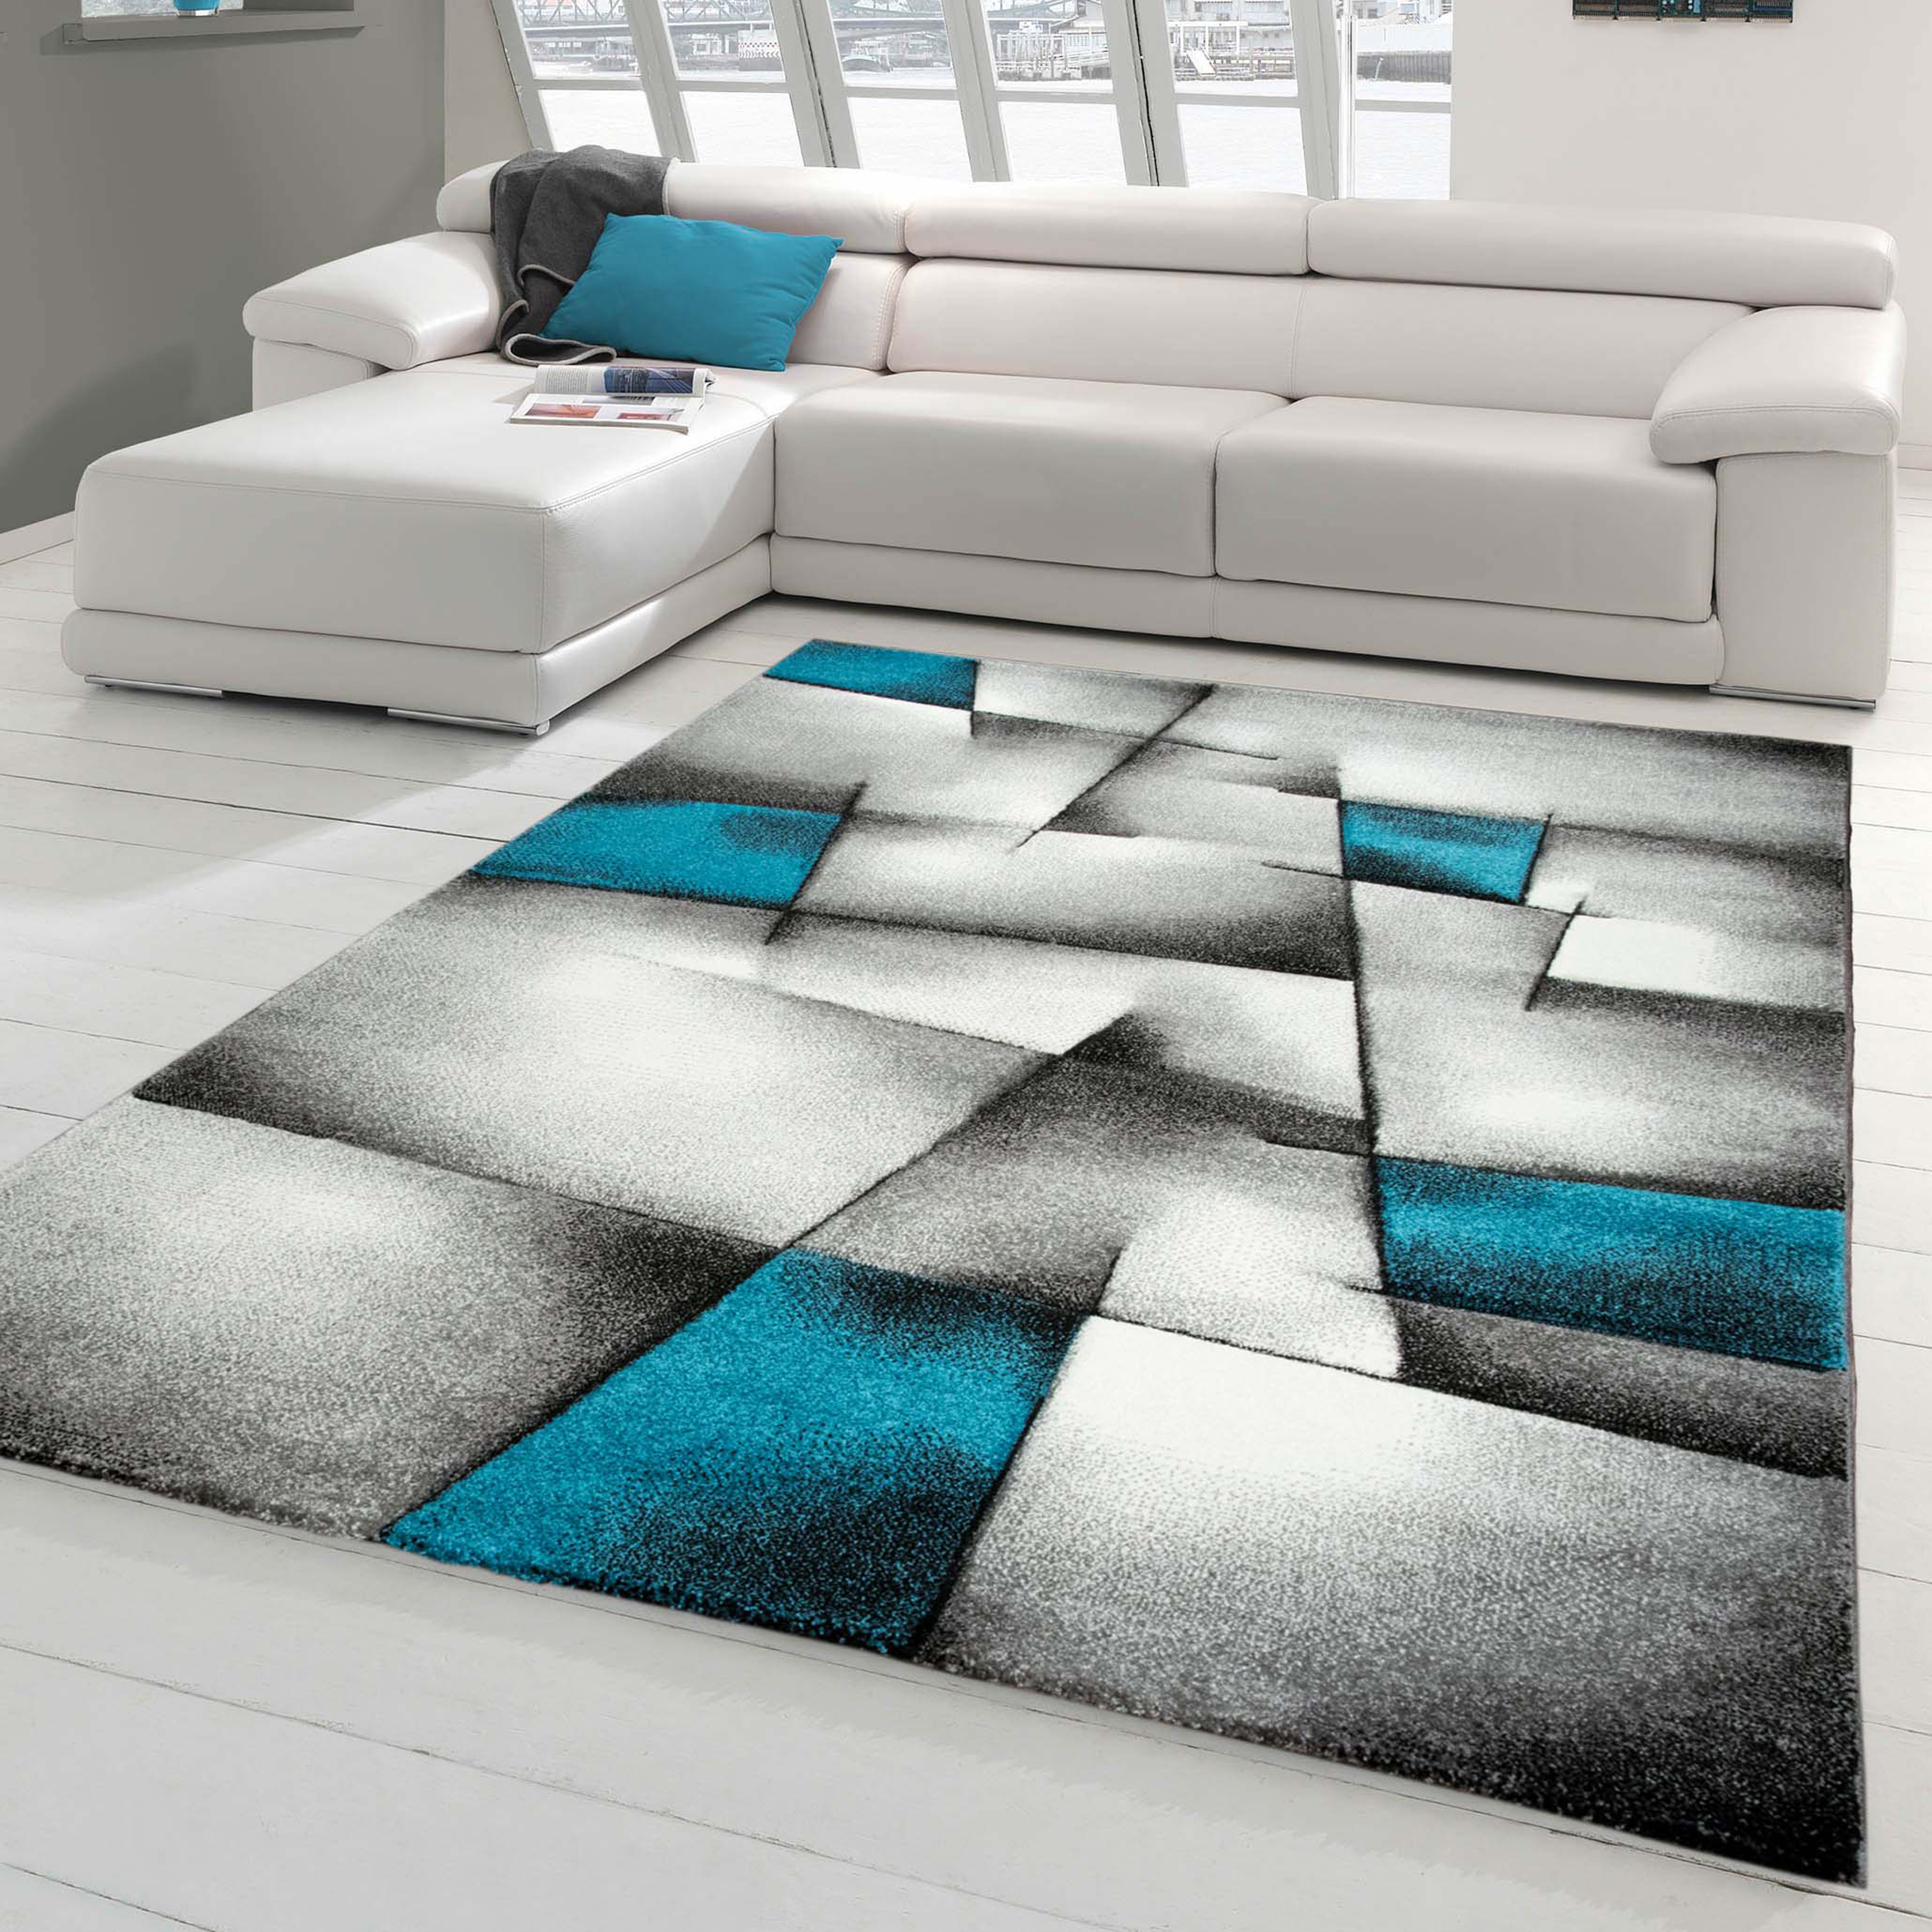 cheap and -Traum carpet dreams High-quality carpets: & Modern - Teppich designer at